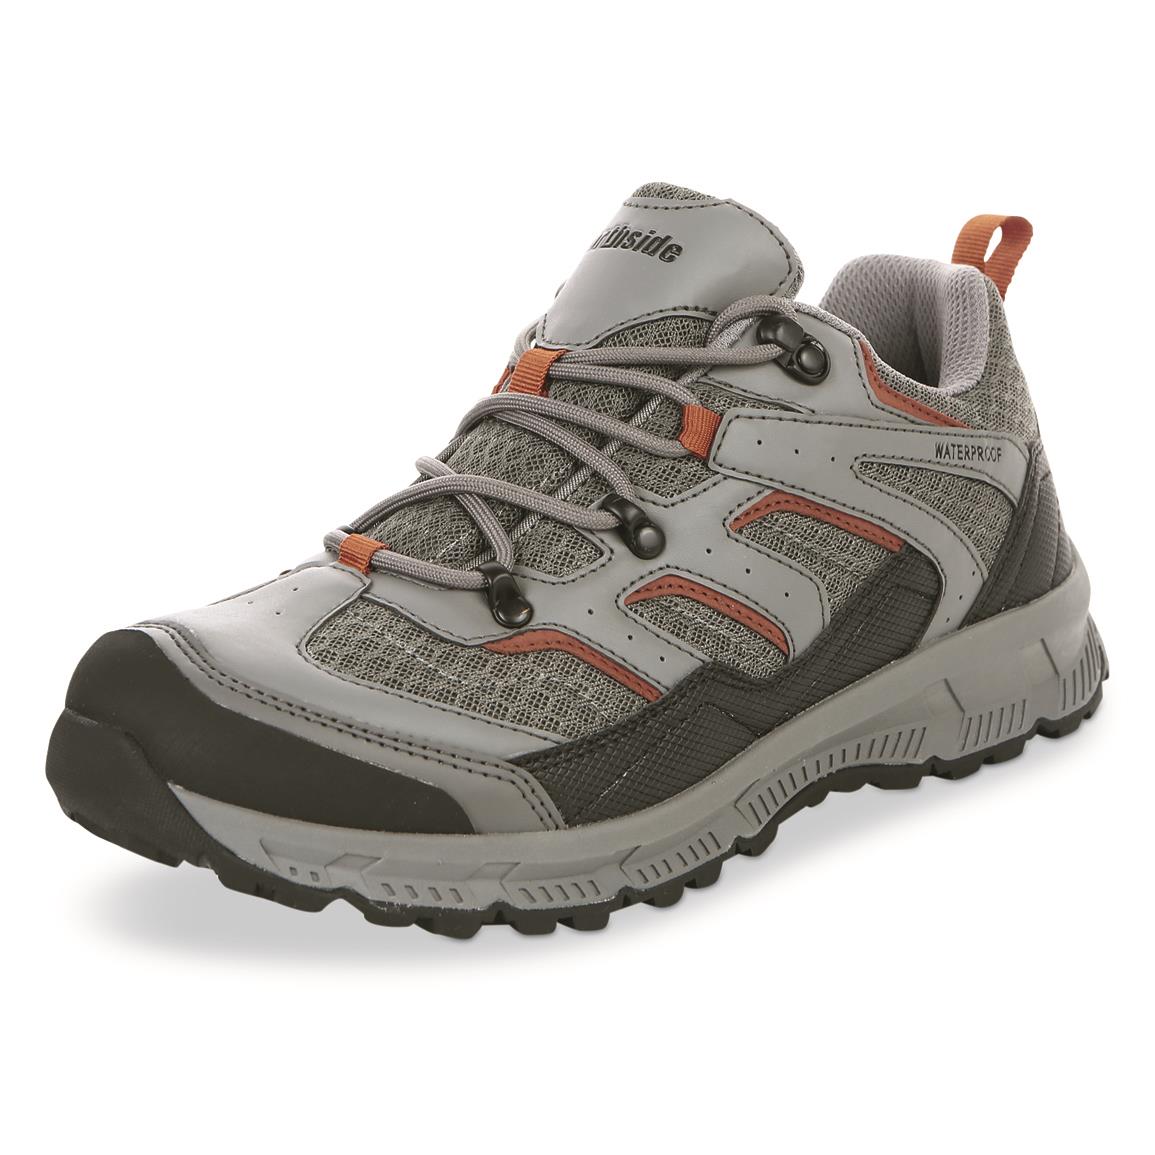 Northside Men's Croswell Low Waterproof Hiking Shoes, Gray/Orange